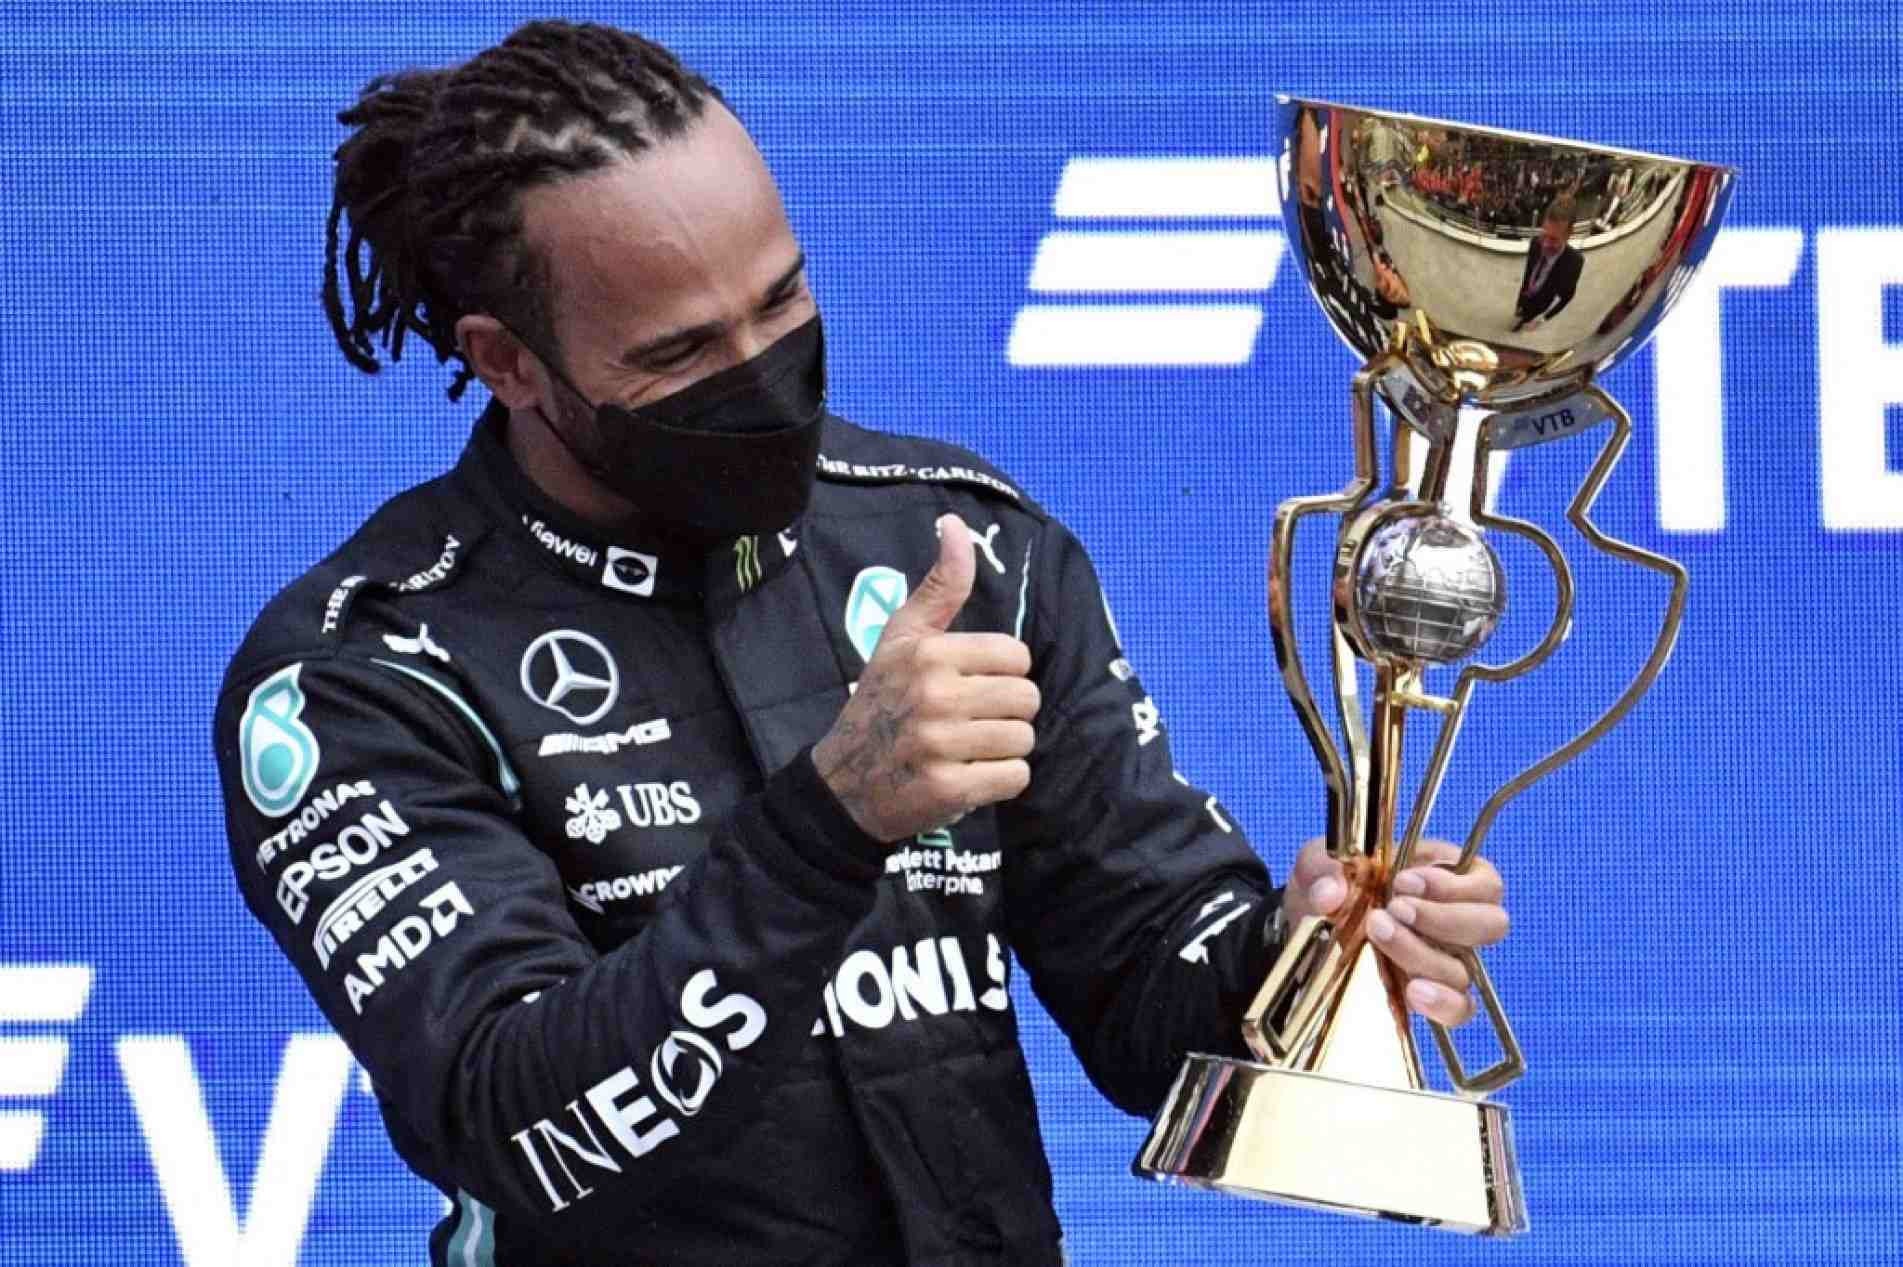 Lewis Hamilton comemora no pódio após o Grande Prêmio da Rússia de Fórmula 1